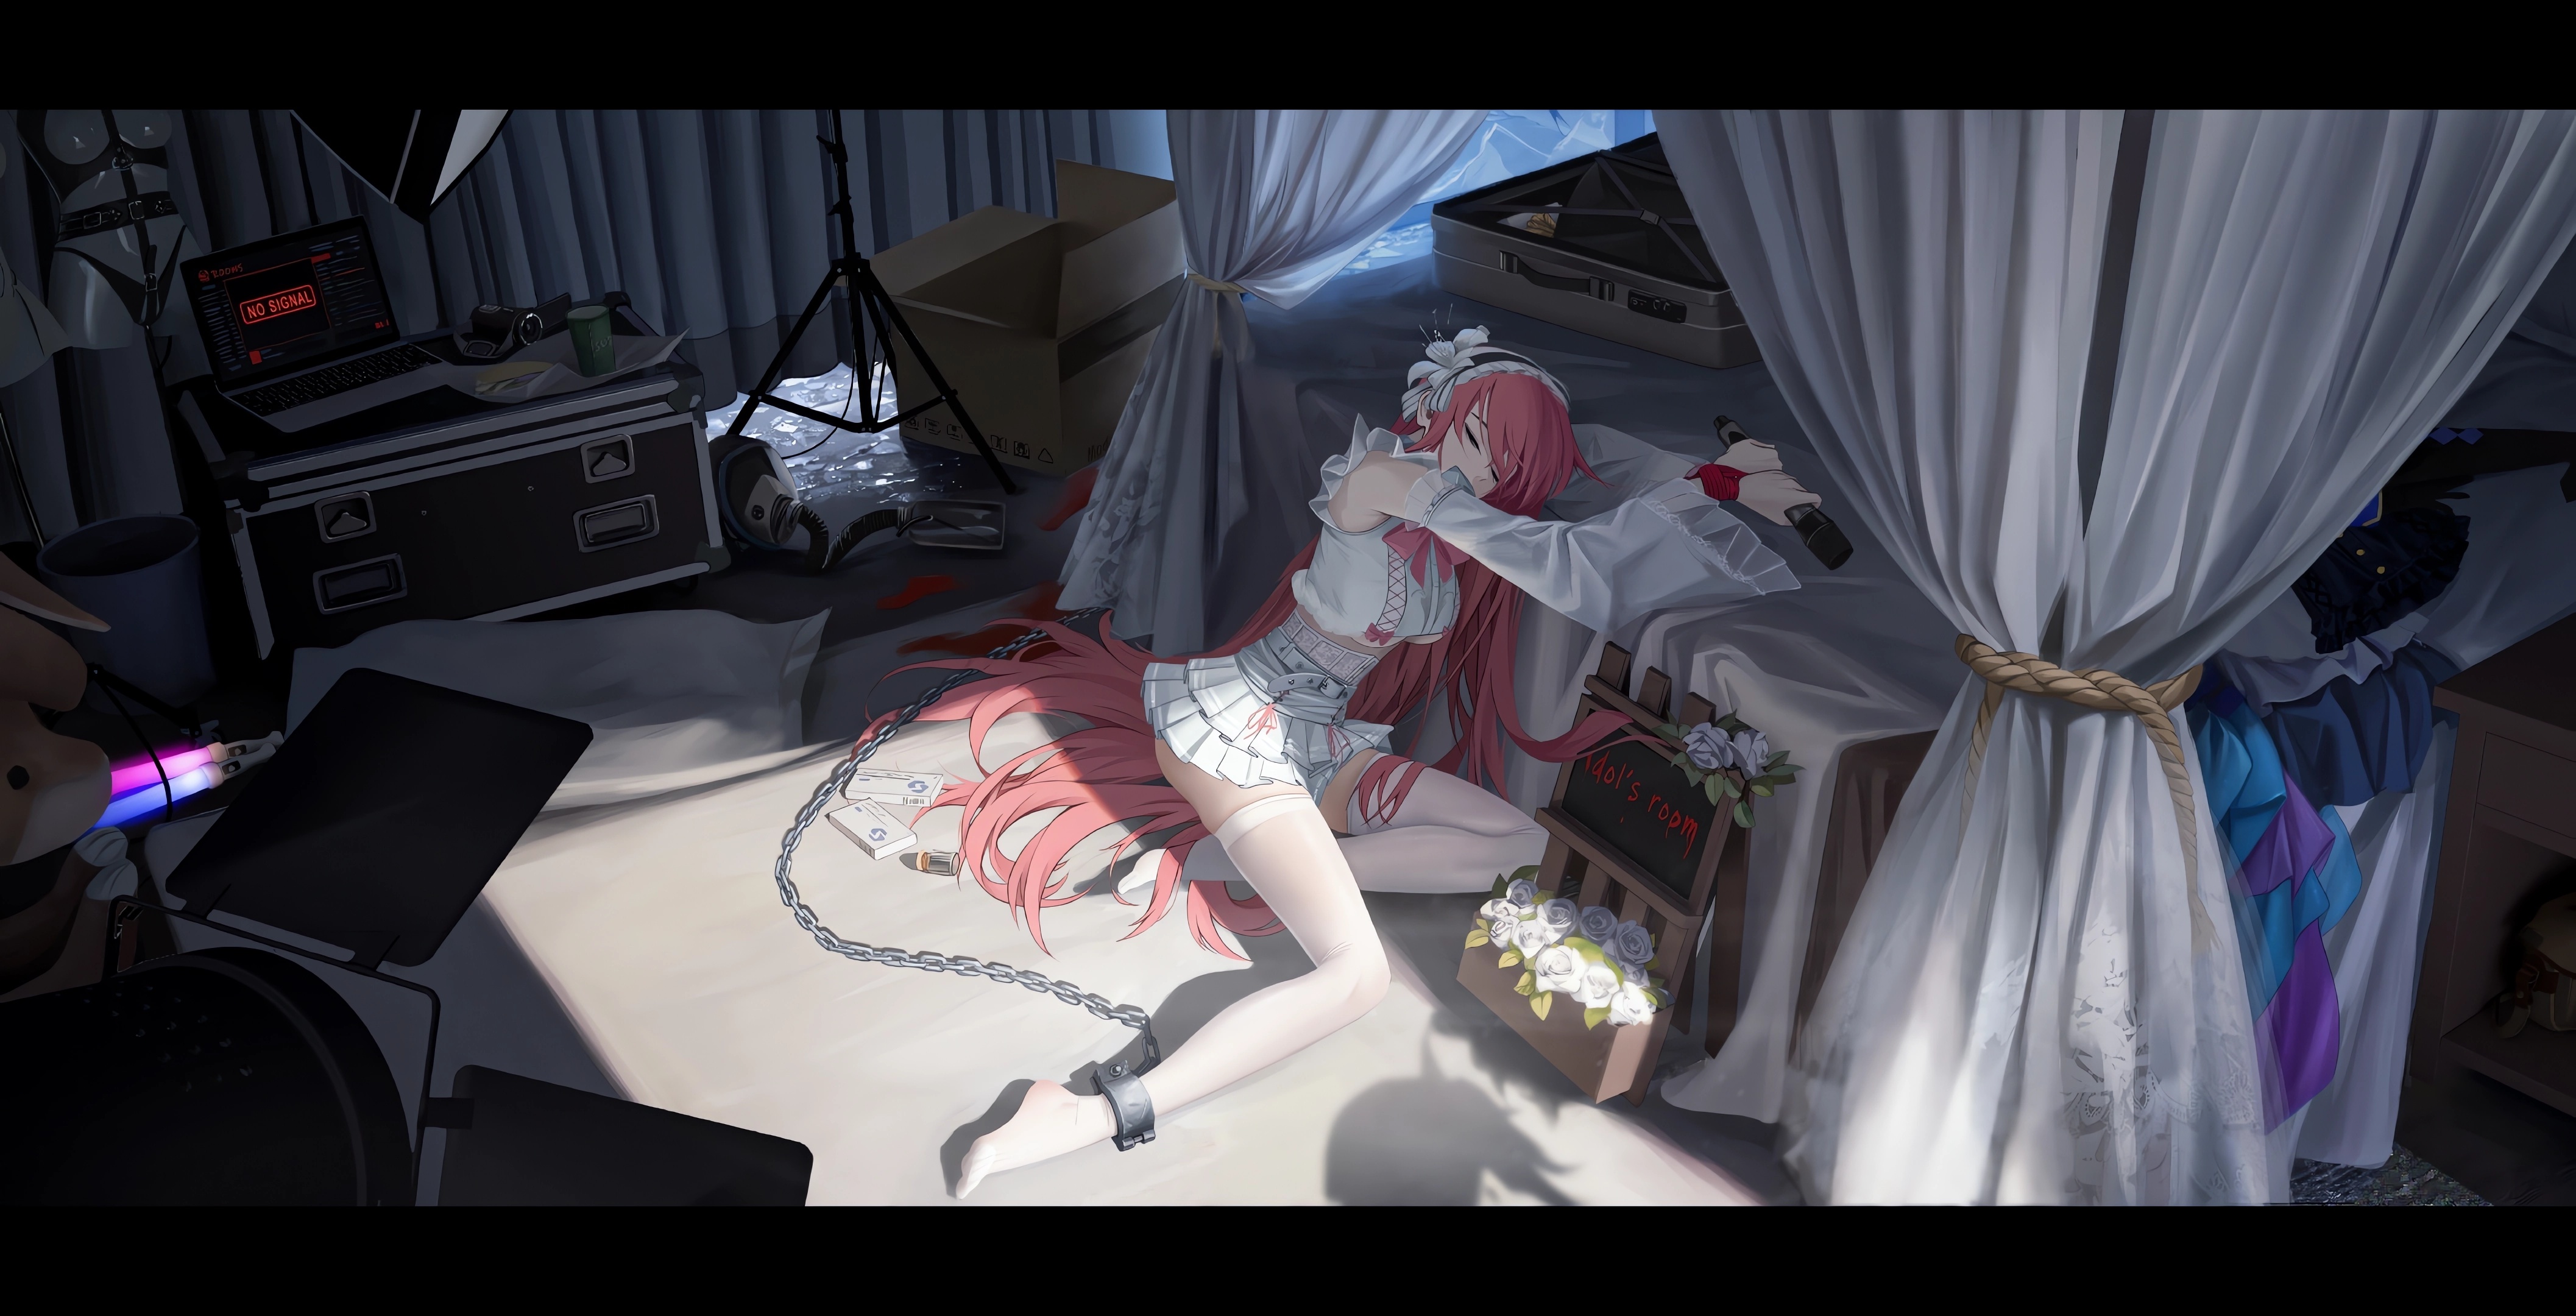 Anime 4228x2160 anime anime girls ankle cuffs stockings long hair closed eyes bed room sleeping underboob redhead skirt microphone